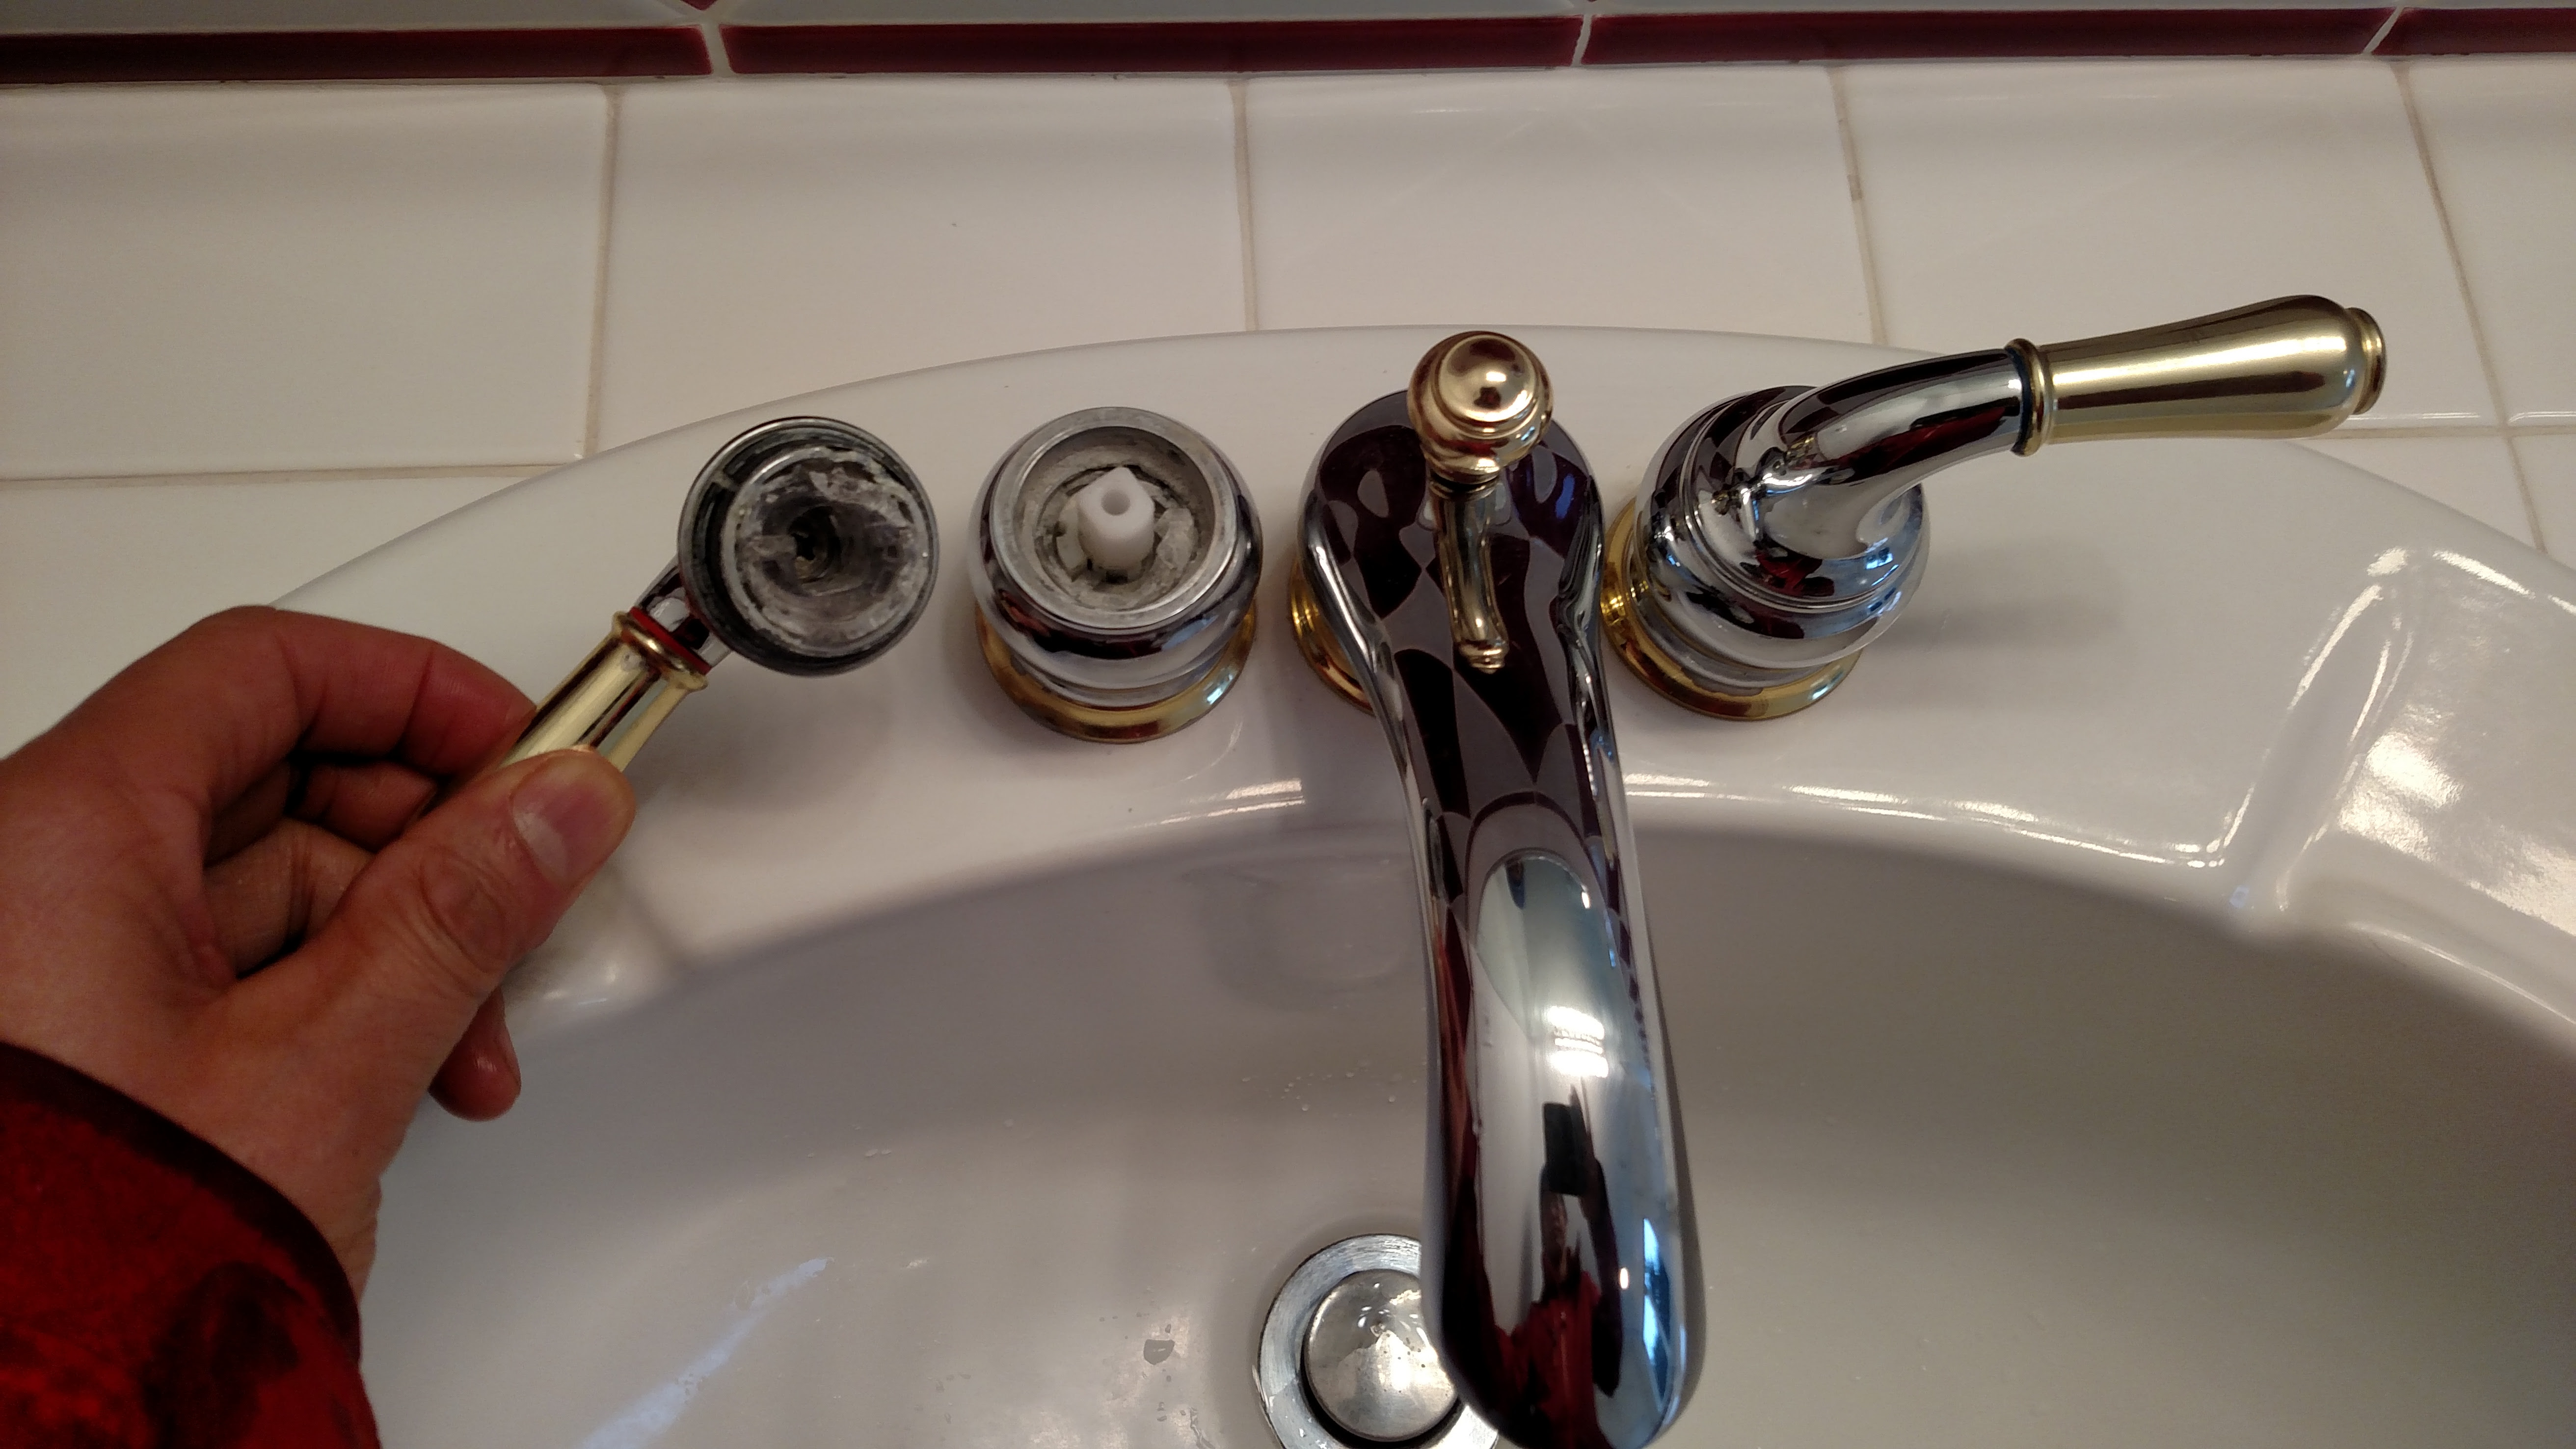 restrictor on bathroom sink